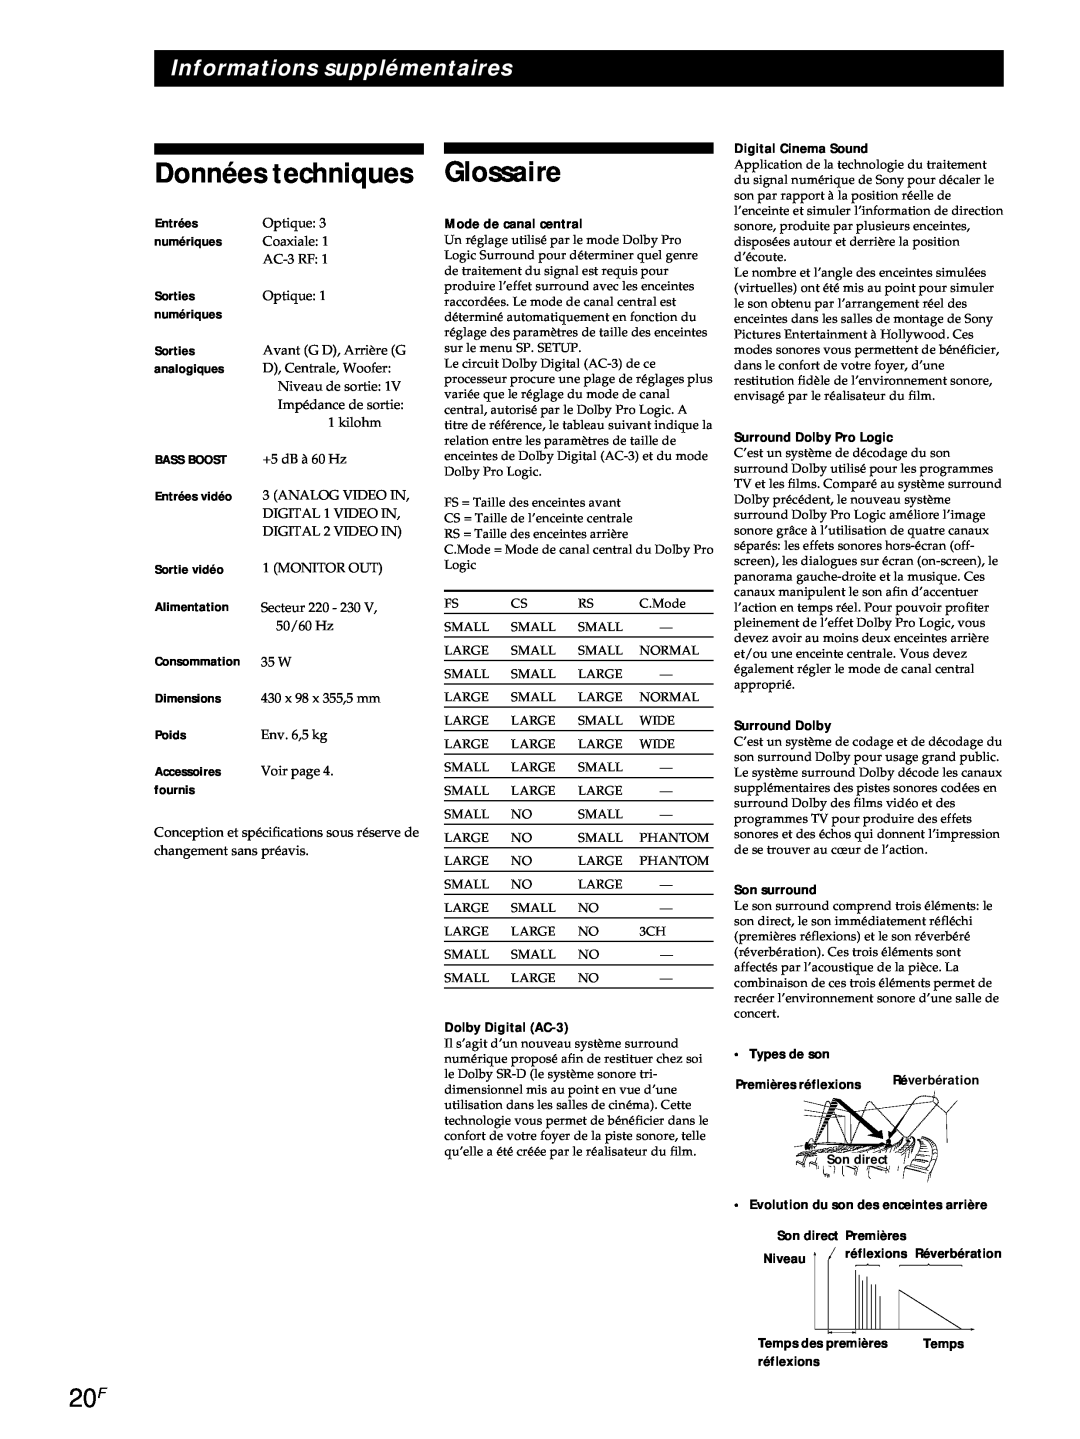 Sony SDP-E800 operating instructions Données techniques, Glossaire, Informations supplémentaires, Env. 6,5 kg, Voir page 